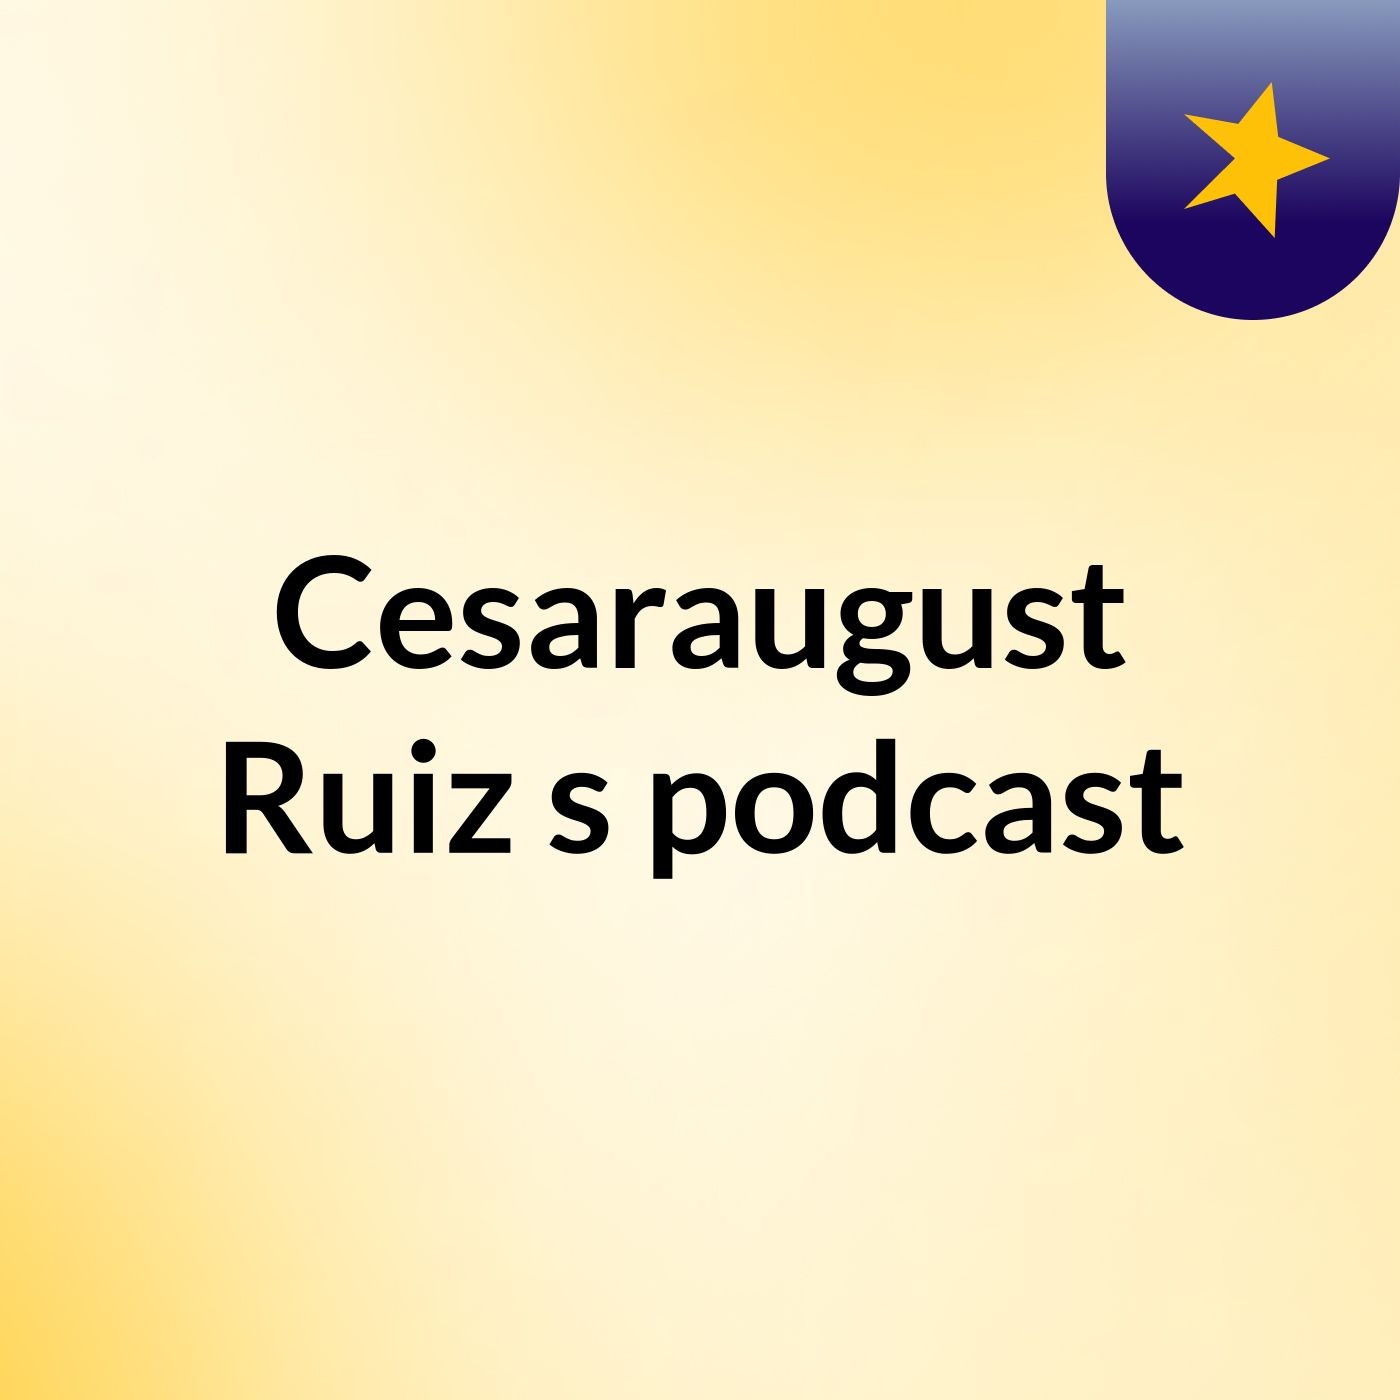 Cesaraugust Ruiz's podcast